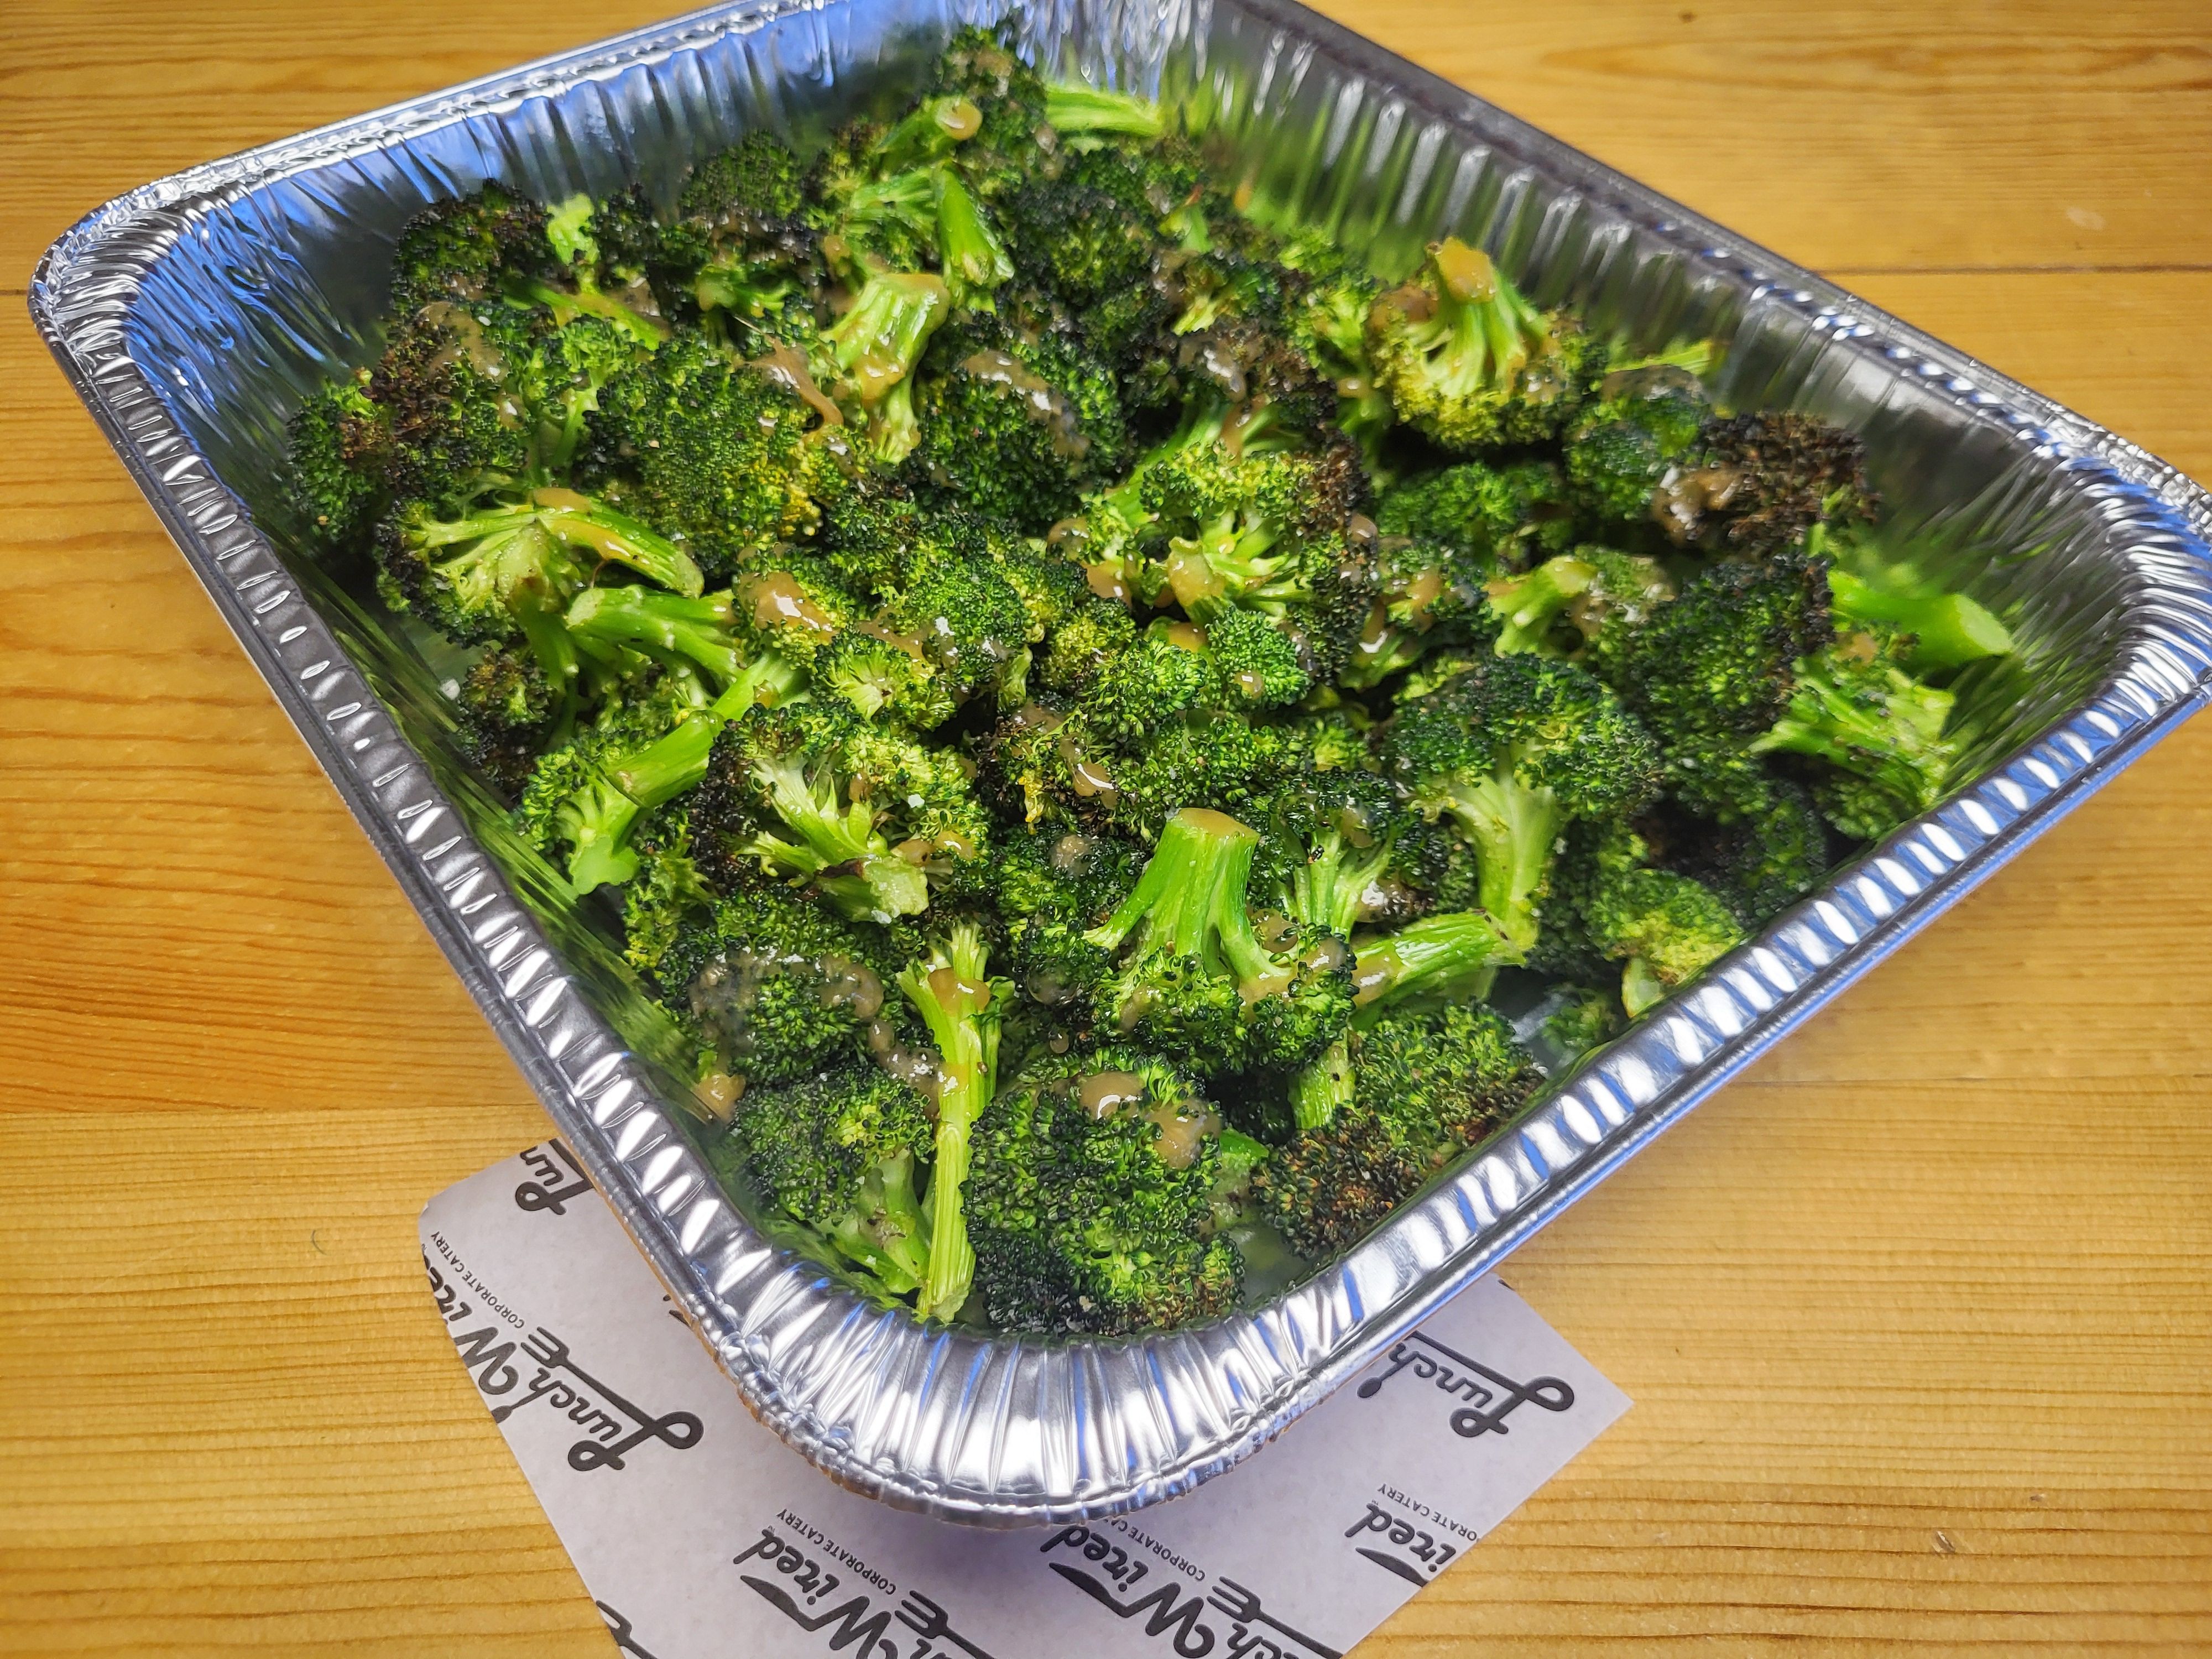 Ponzu Roasted Broccoli